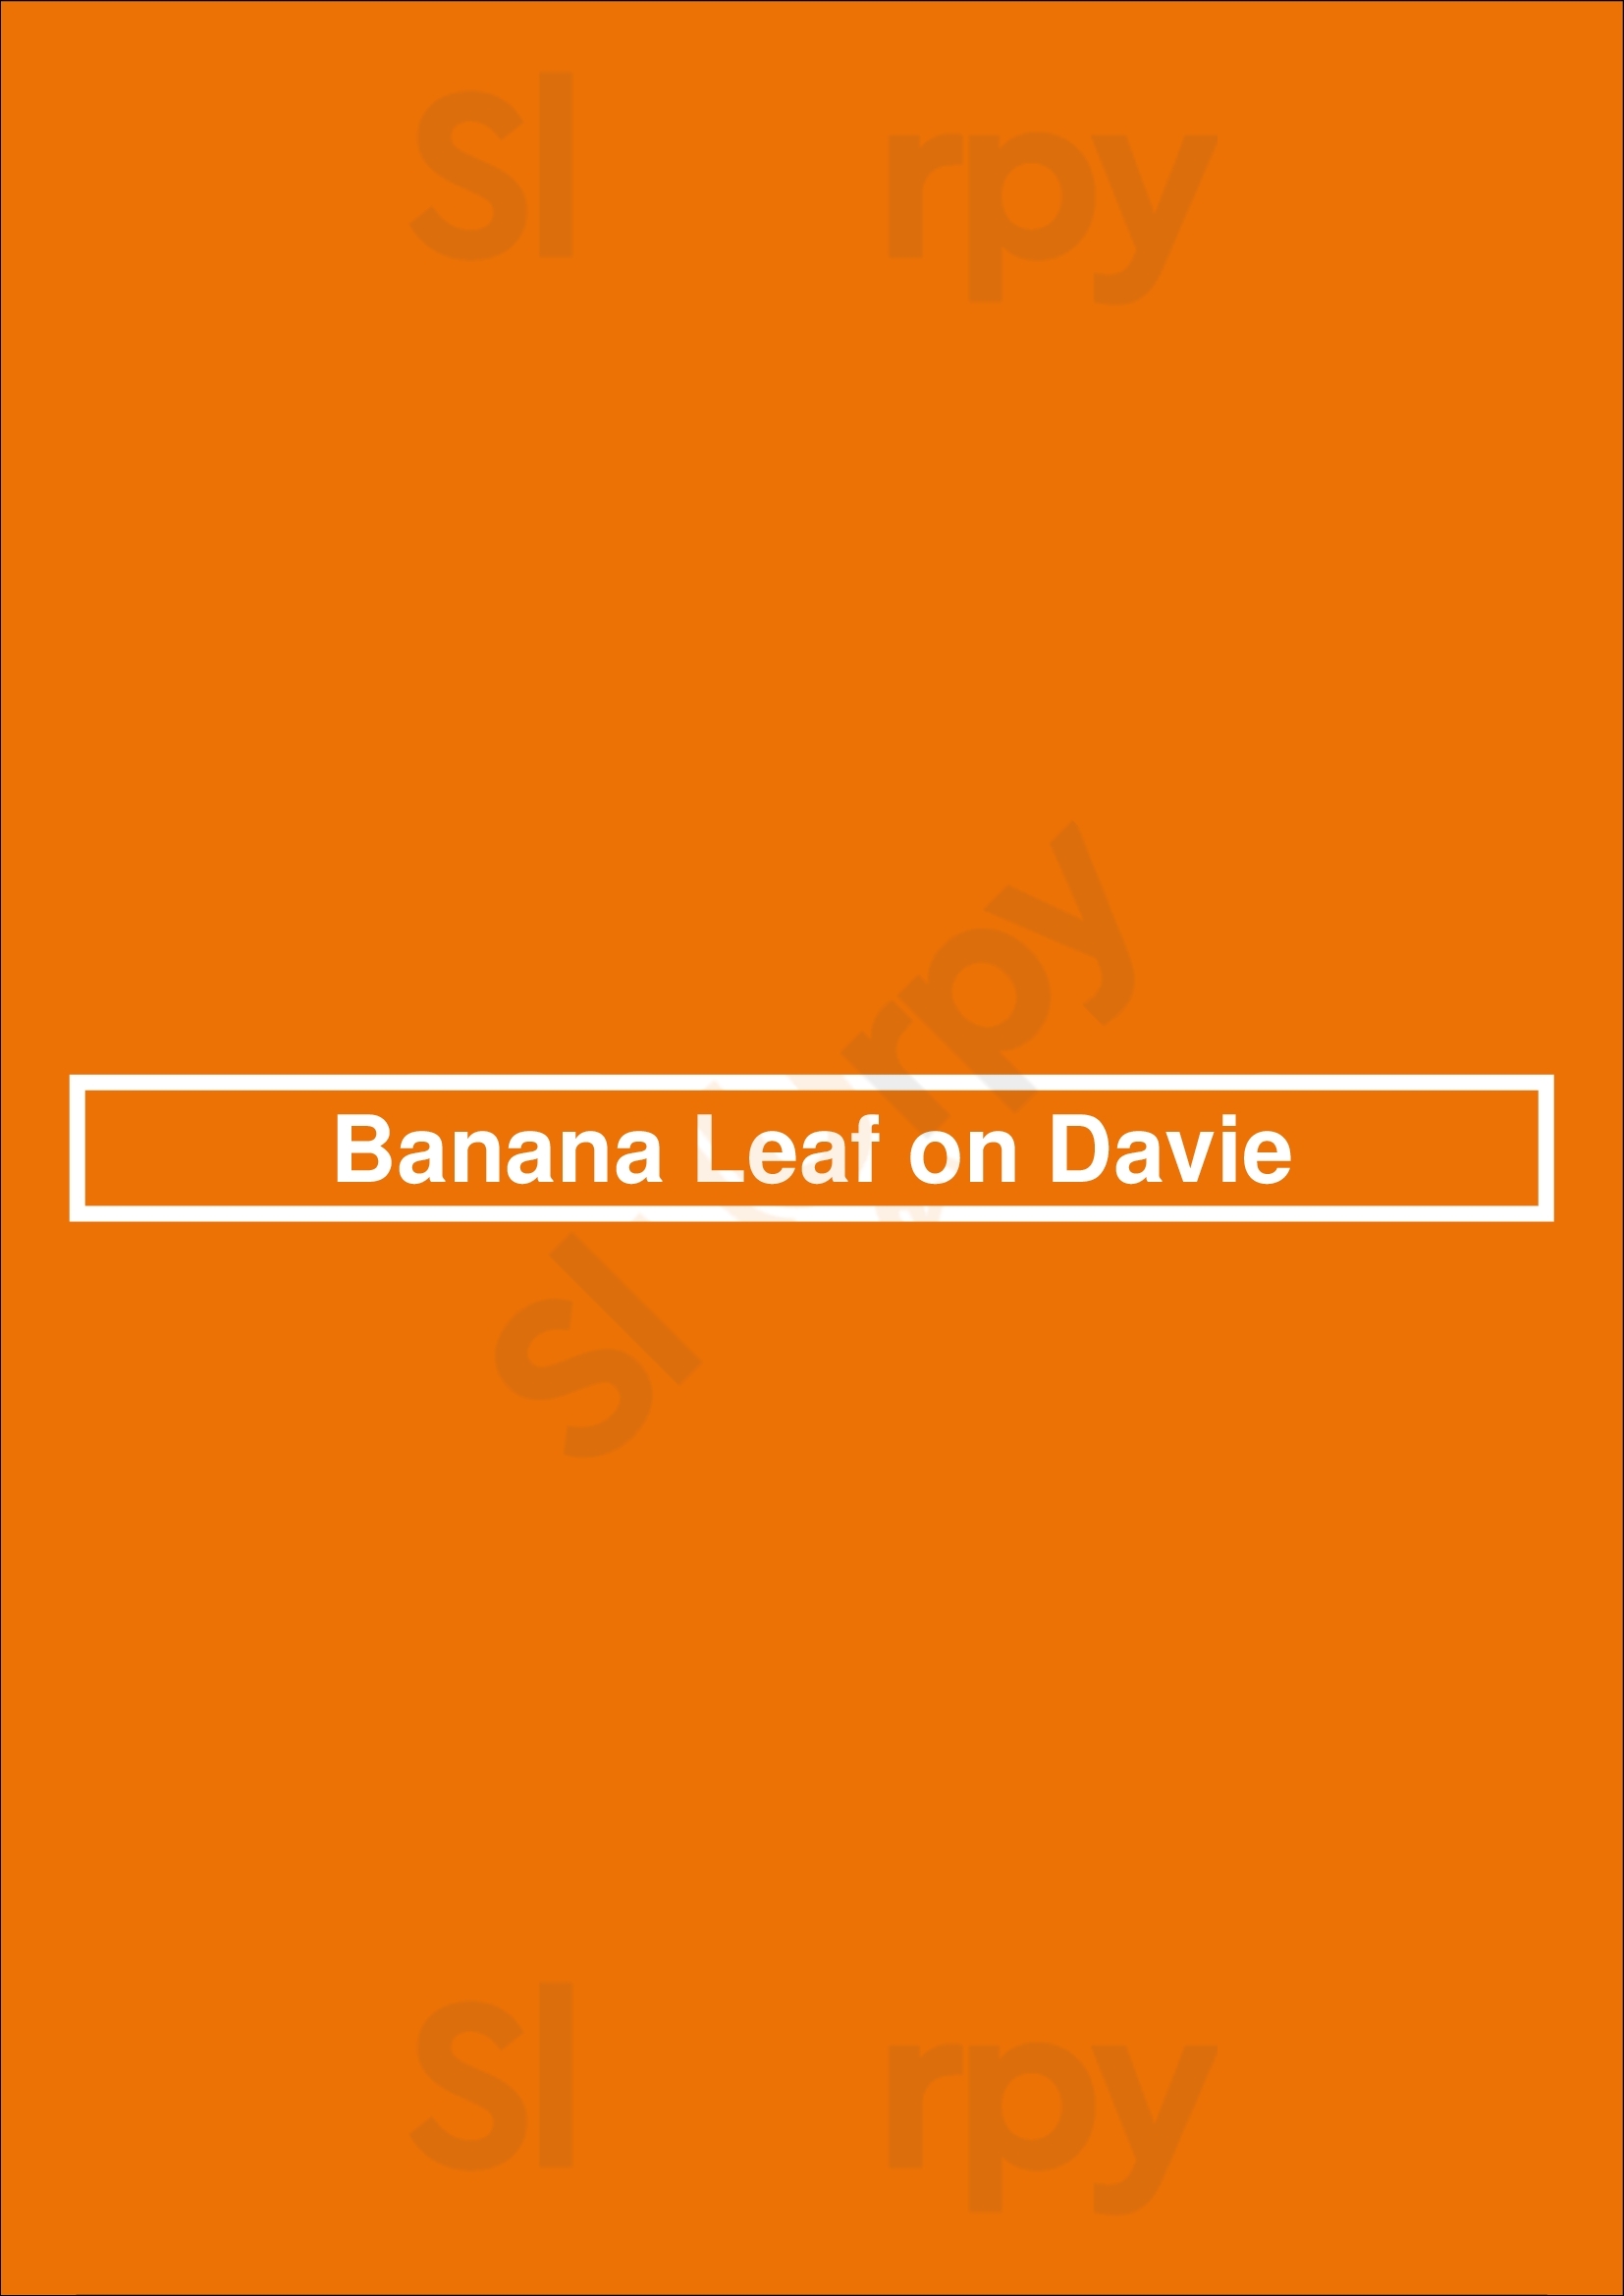 Banana Leaf On Davie Vancouver Menu - 1